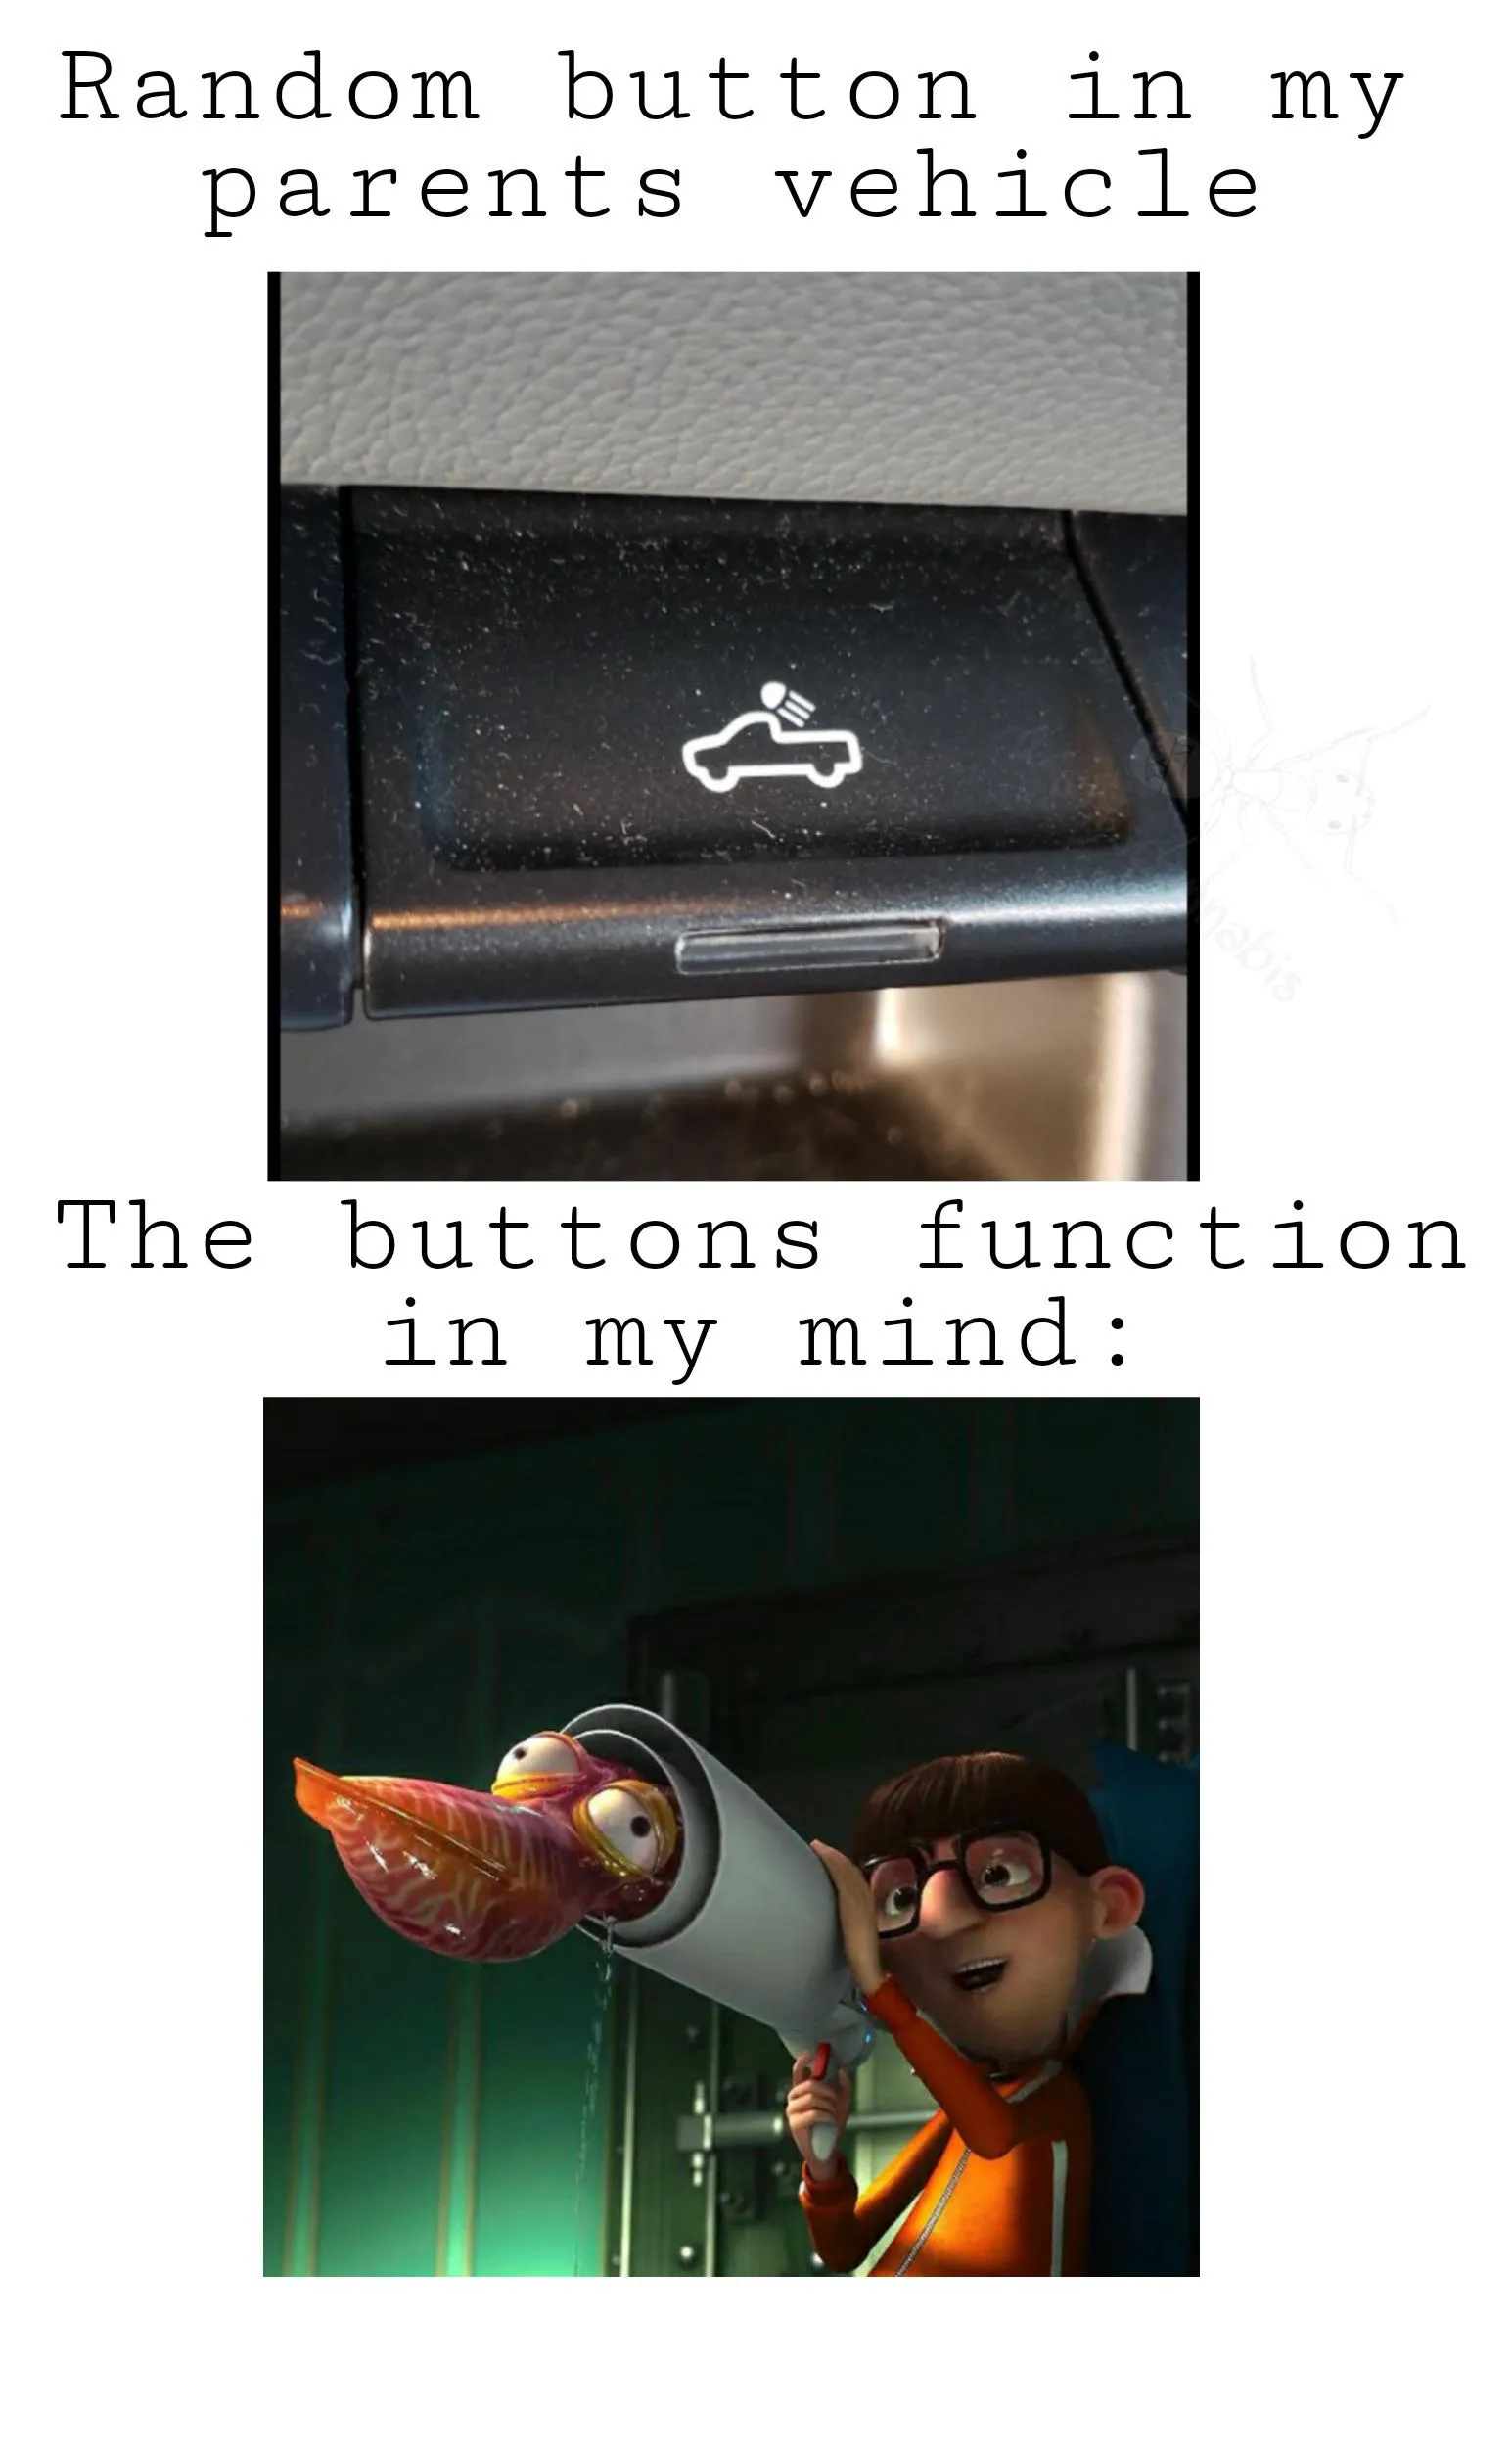 random button in car looks like squid launcher